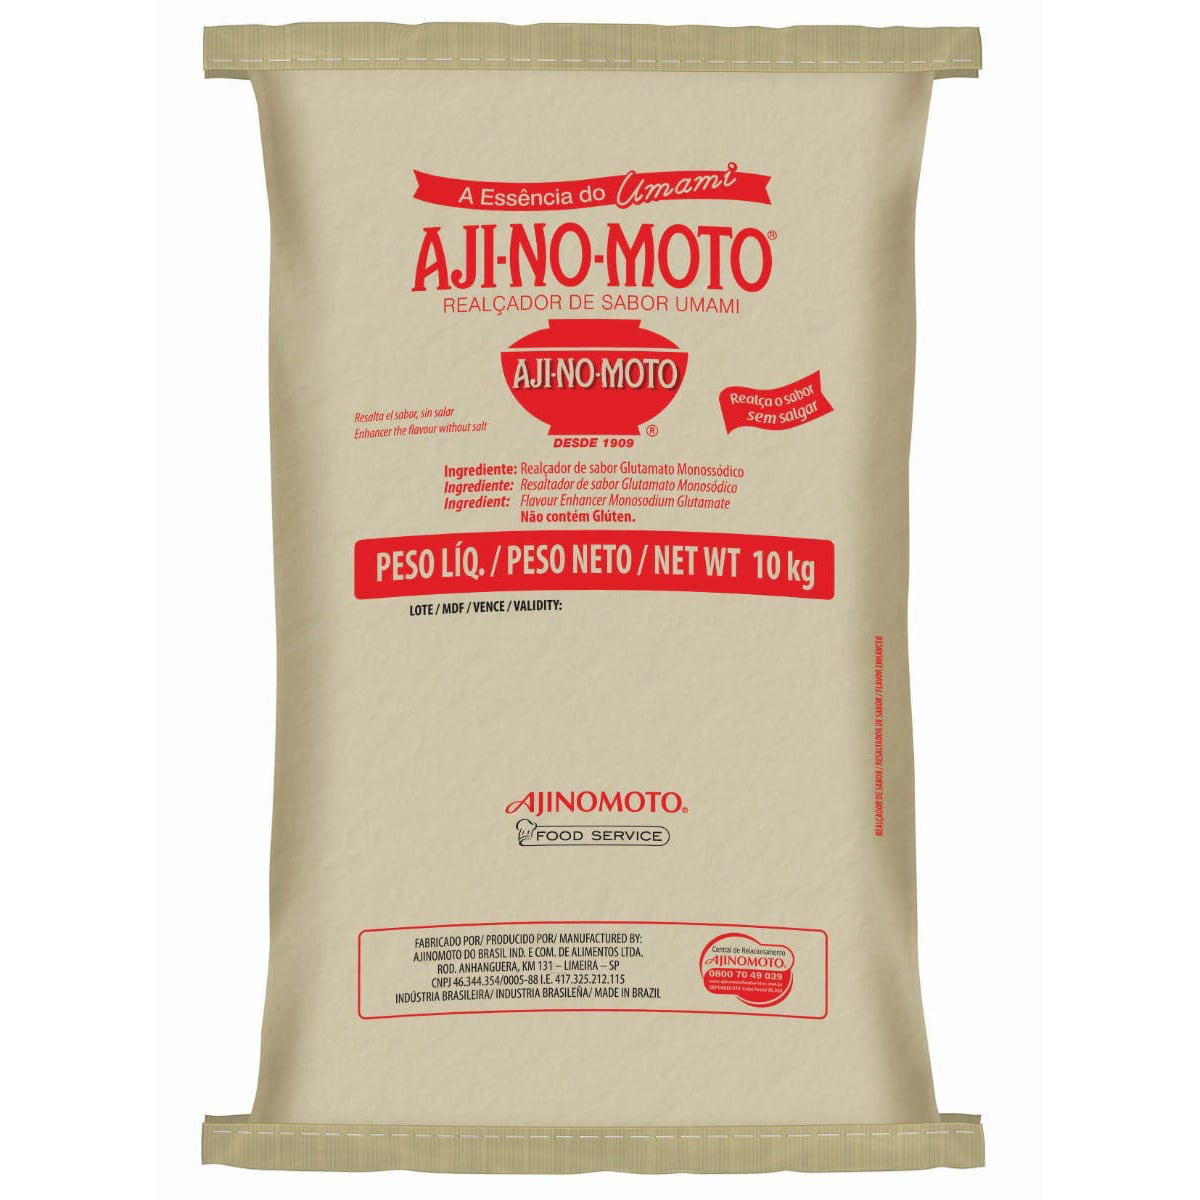 Realçador de Sabor Glutamato Monossódio - Ajinomoto (10 Kg)